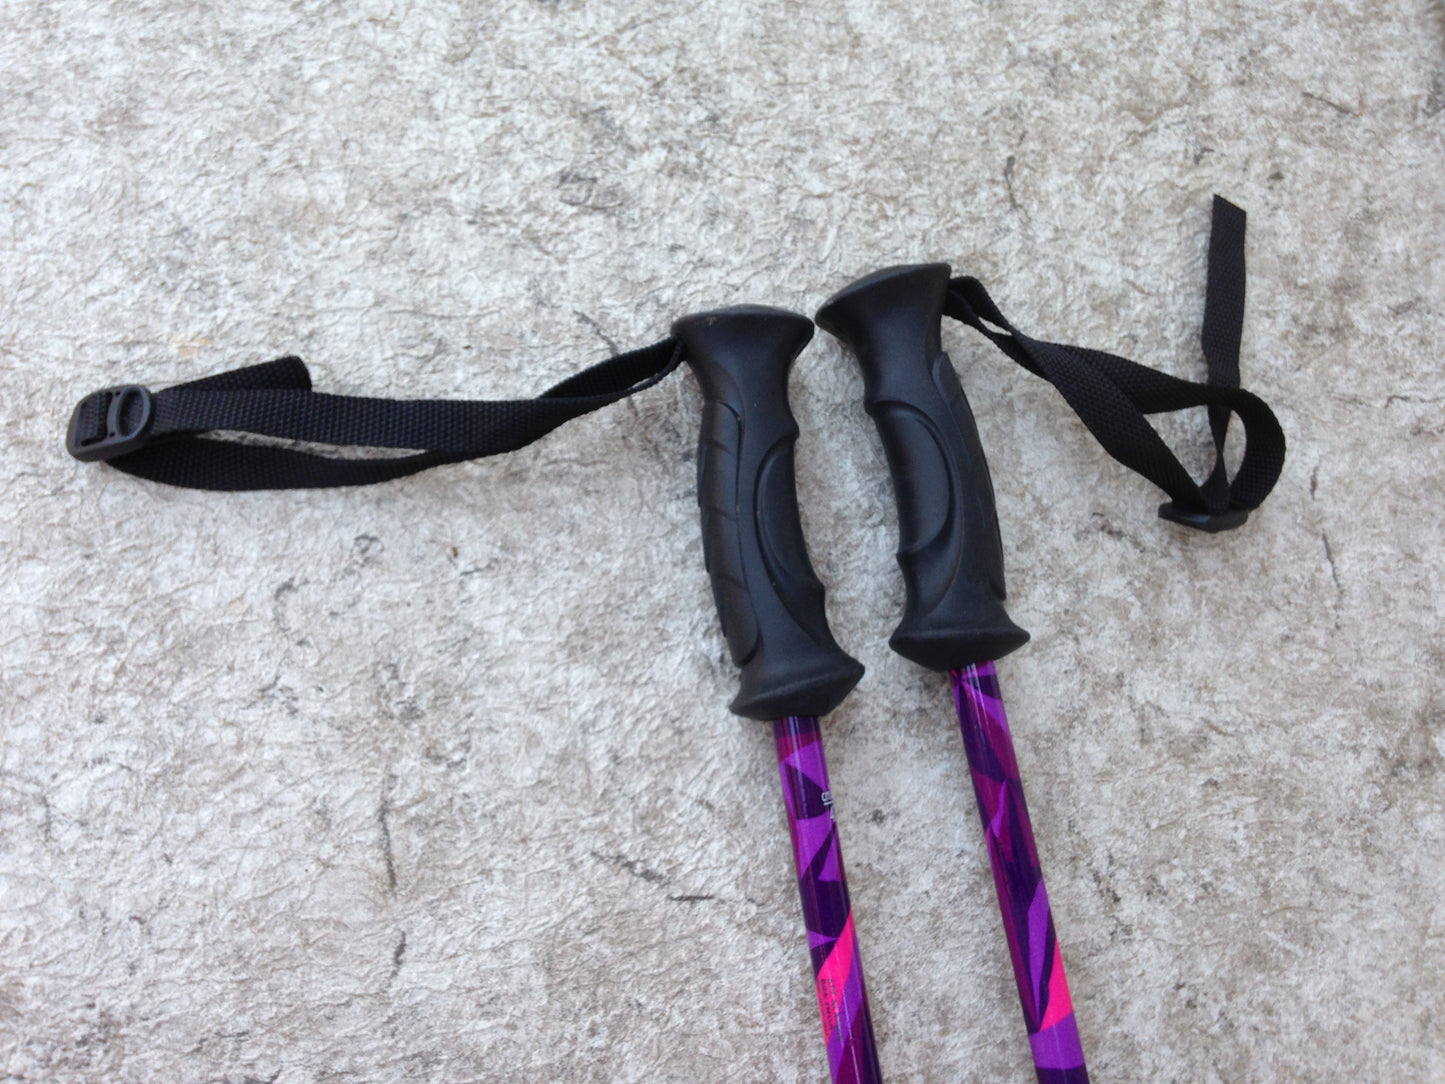 Ski Poles Child Size 42 inch Scott Pink Purple Rubber Handles Excellent